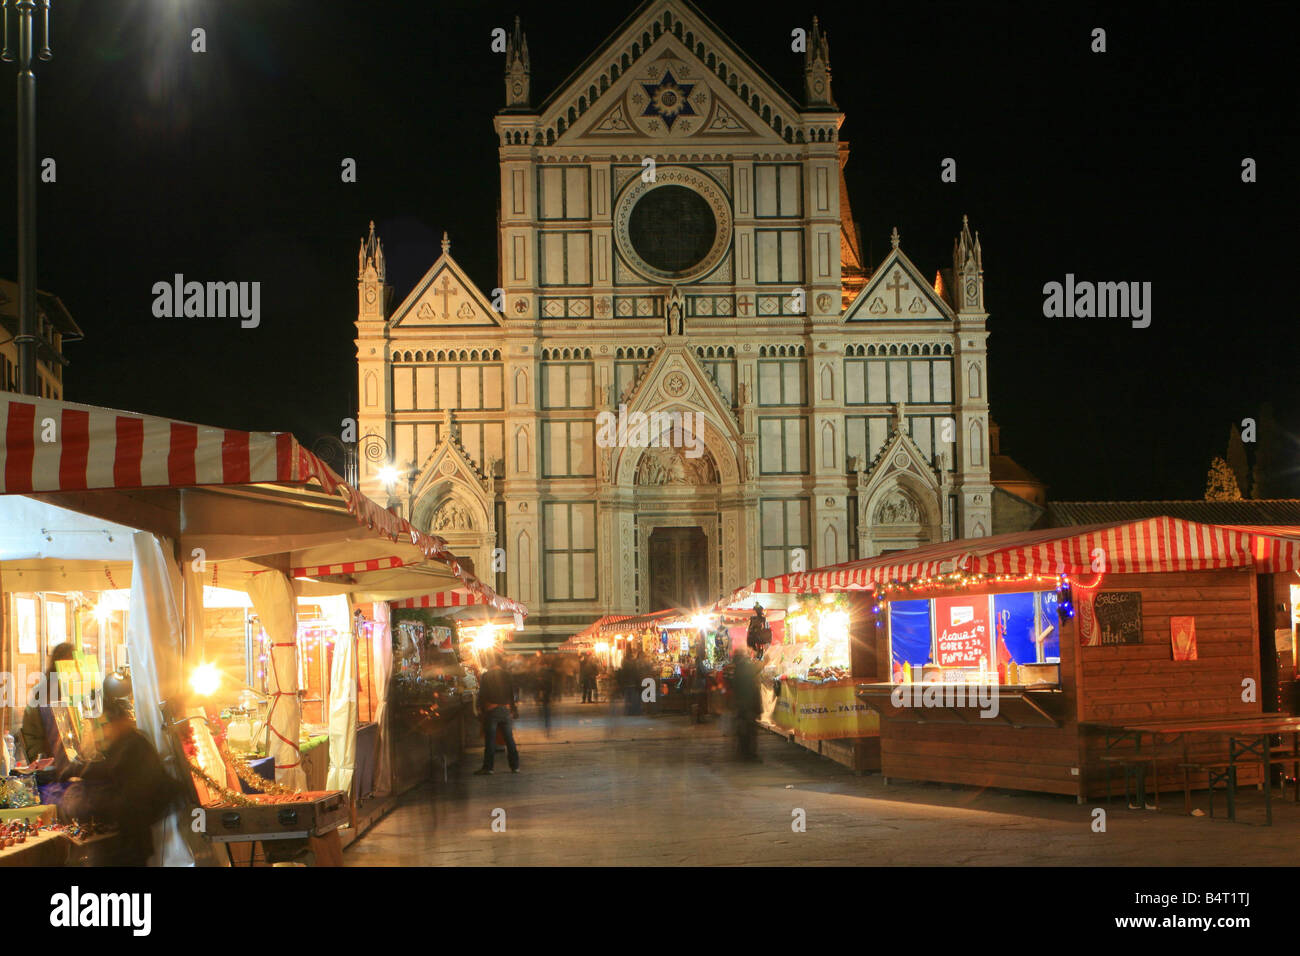 Mercatini Di Natale Firenze.Mercatini Di Natale In Piazza Santa Croce Firenze Toscana Italia Foto Stock Alamy